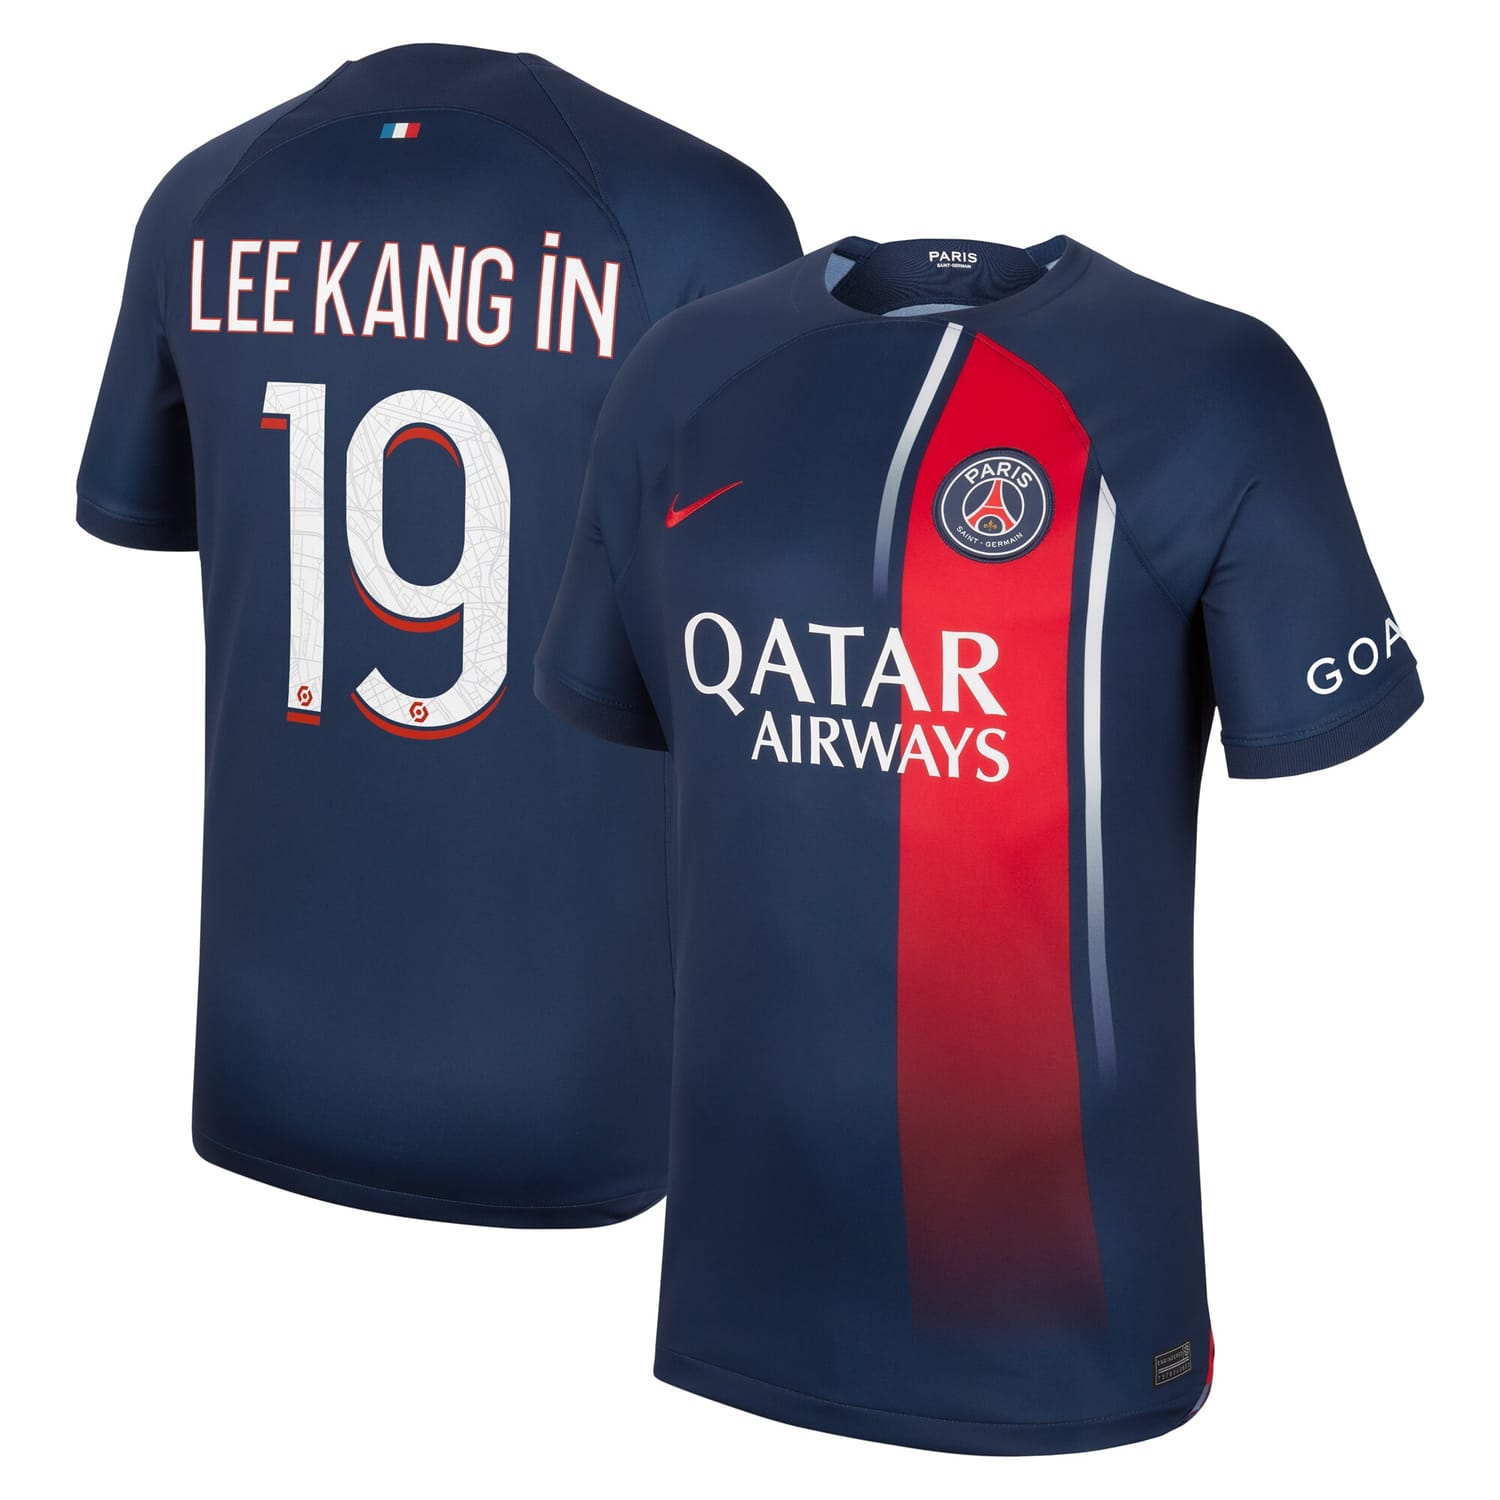 Ligue 1 Paris Saint-Germain Home Jersey Shirt Navy 2023-24 player Lee Kang In printing for Men